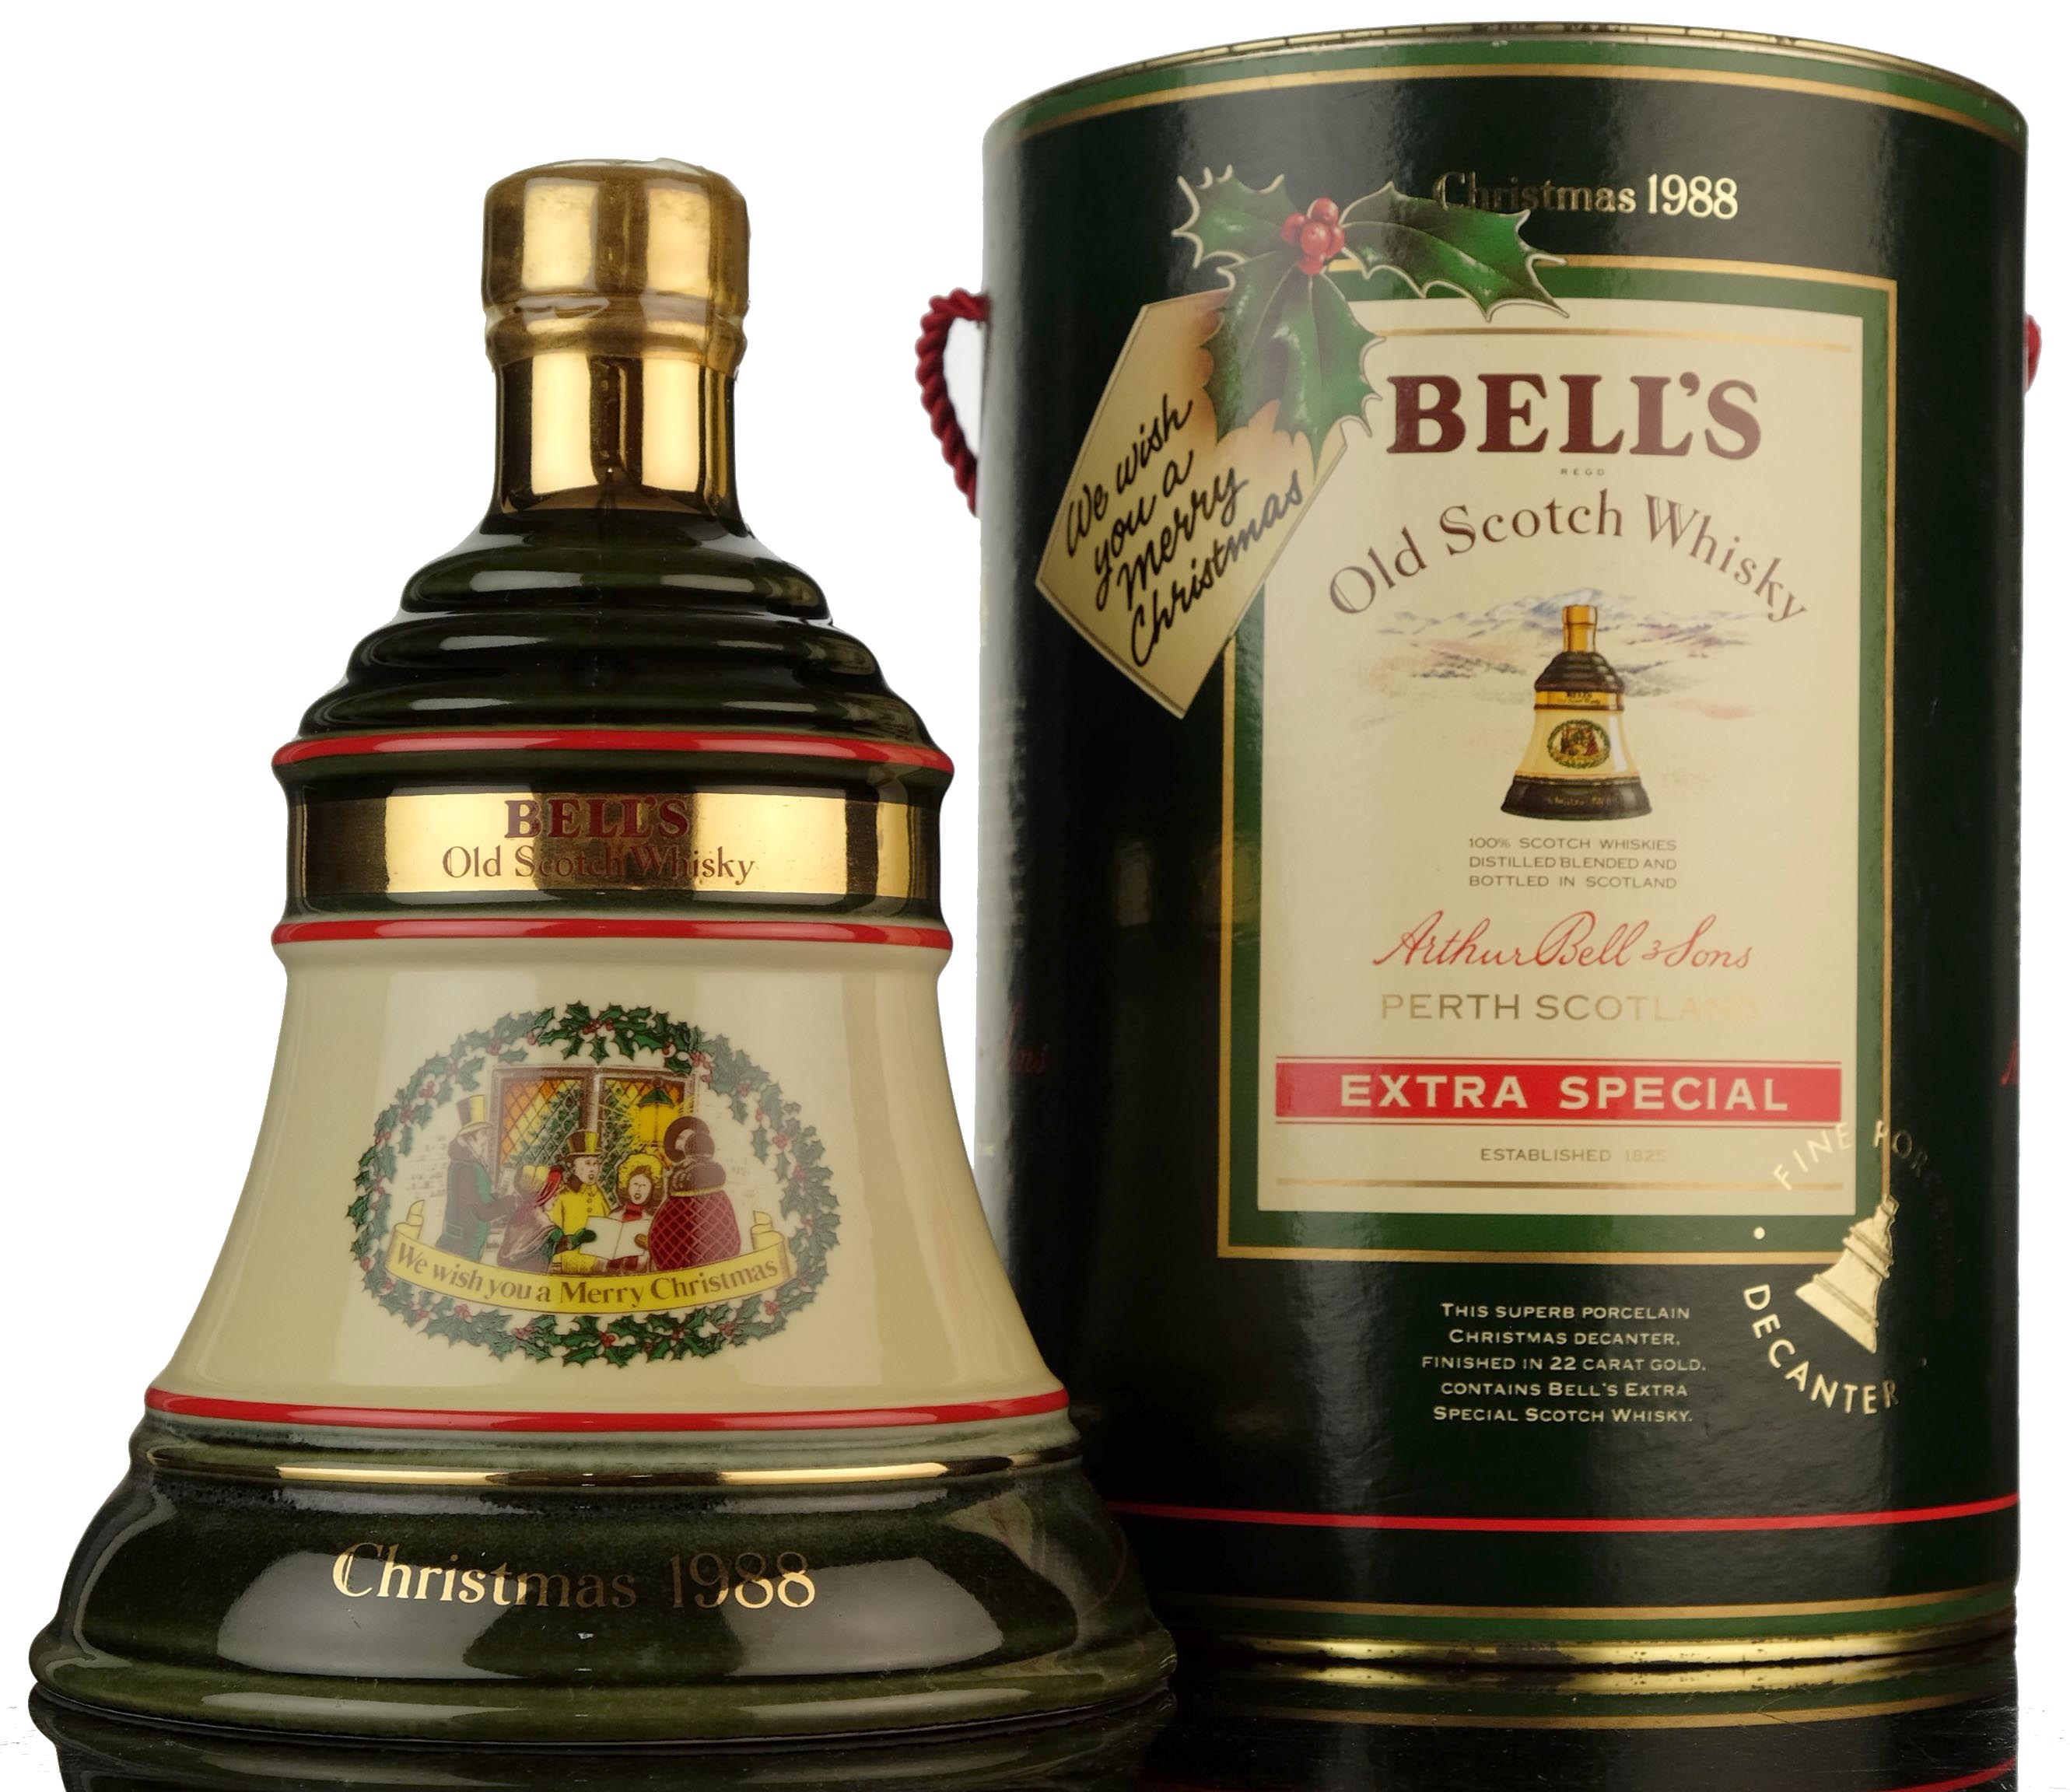 Bells Christmas 1988